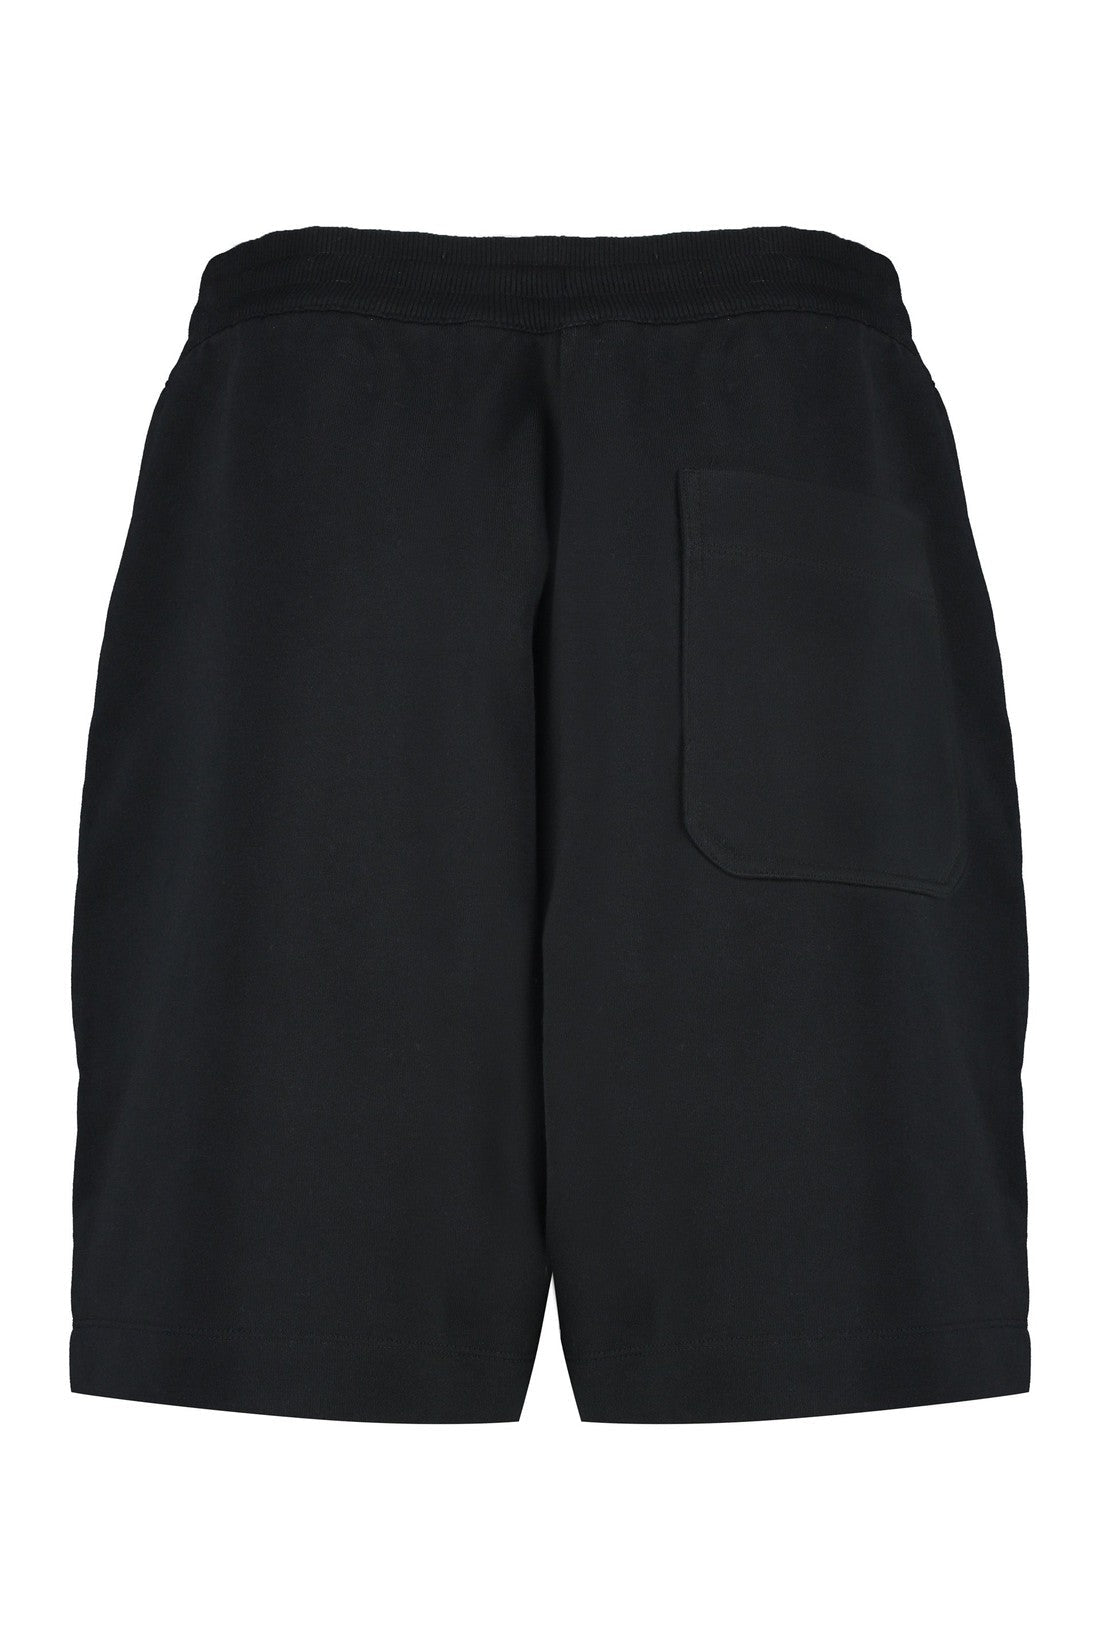 adidas Y-3-OUTLET-SALE-Fleece shorts-ARCHIVIST